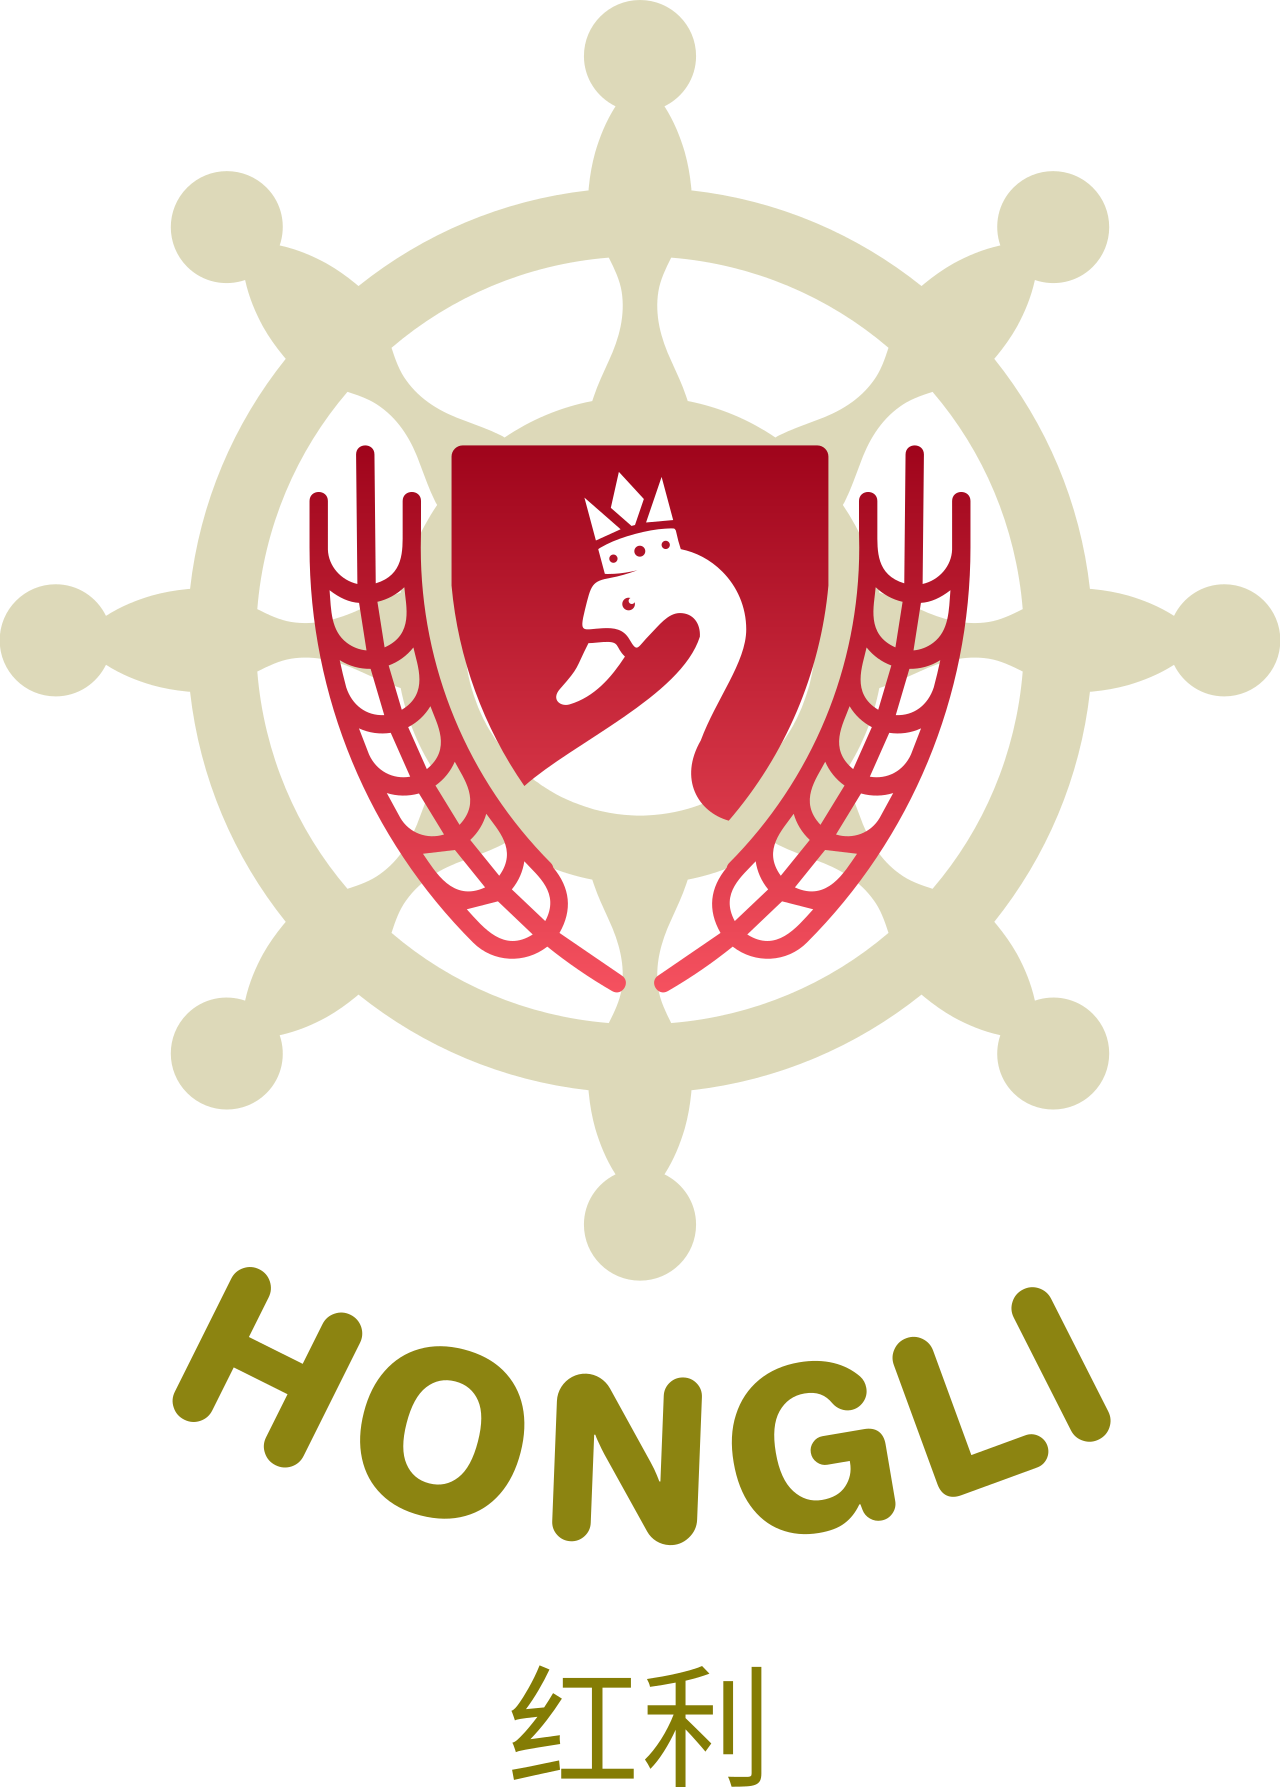 HONGLI 's logo